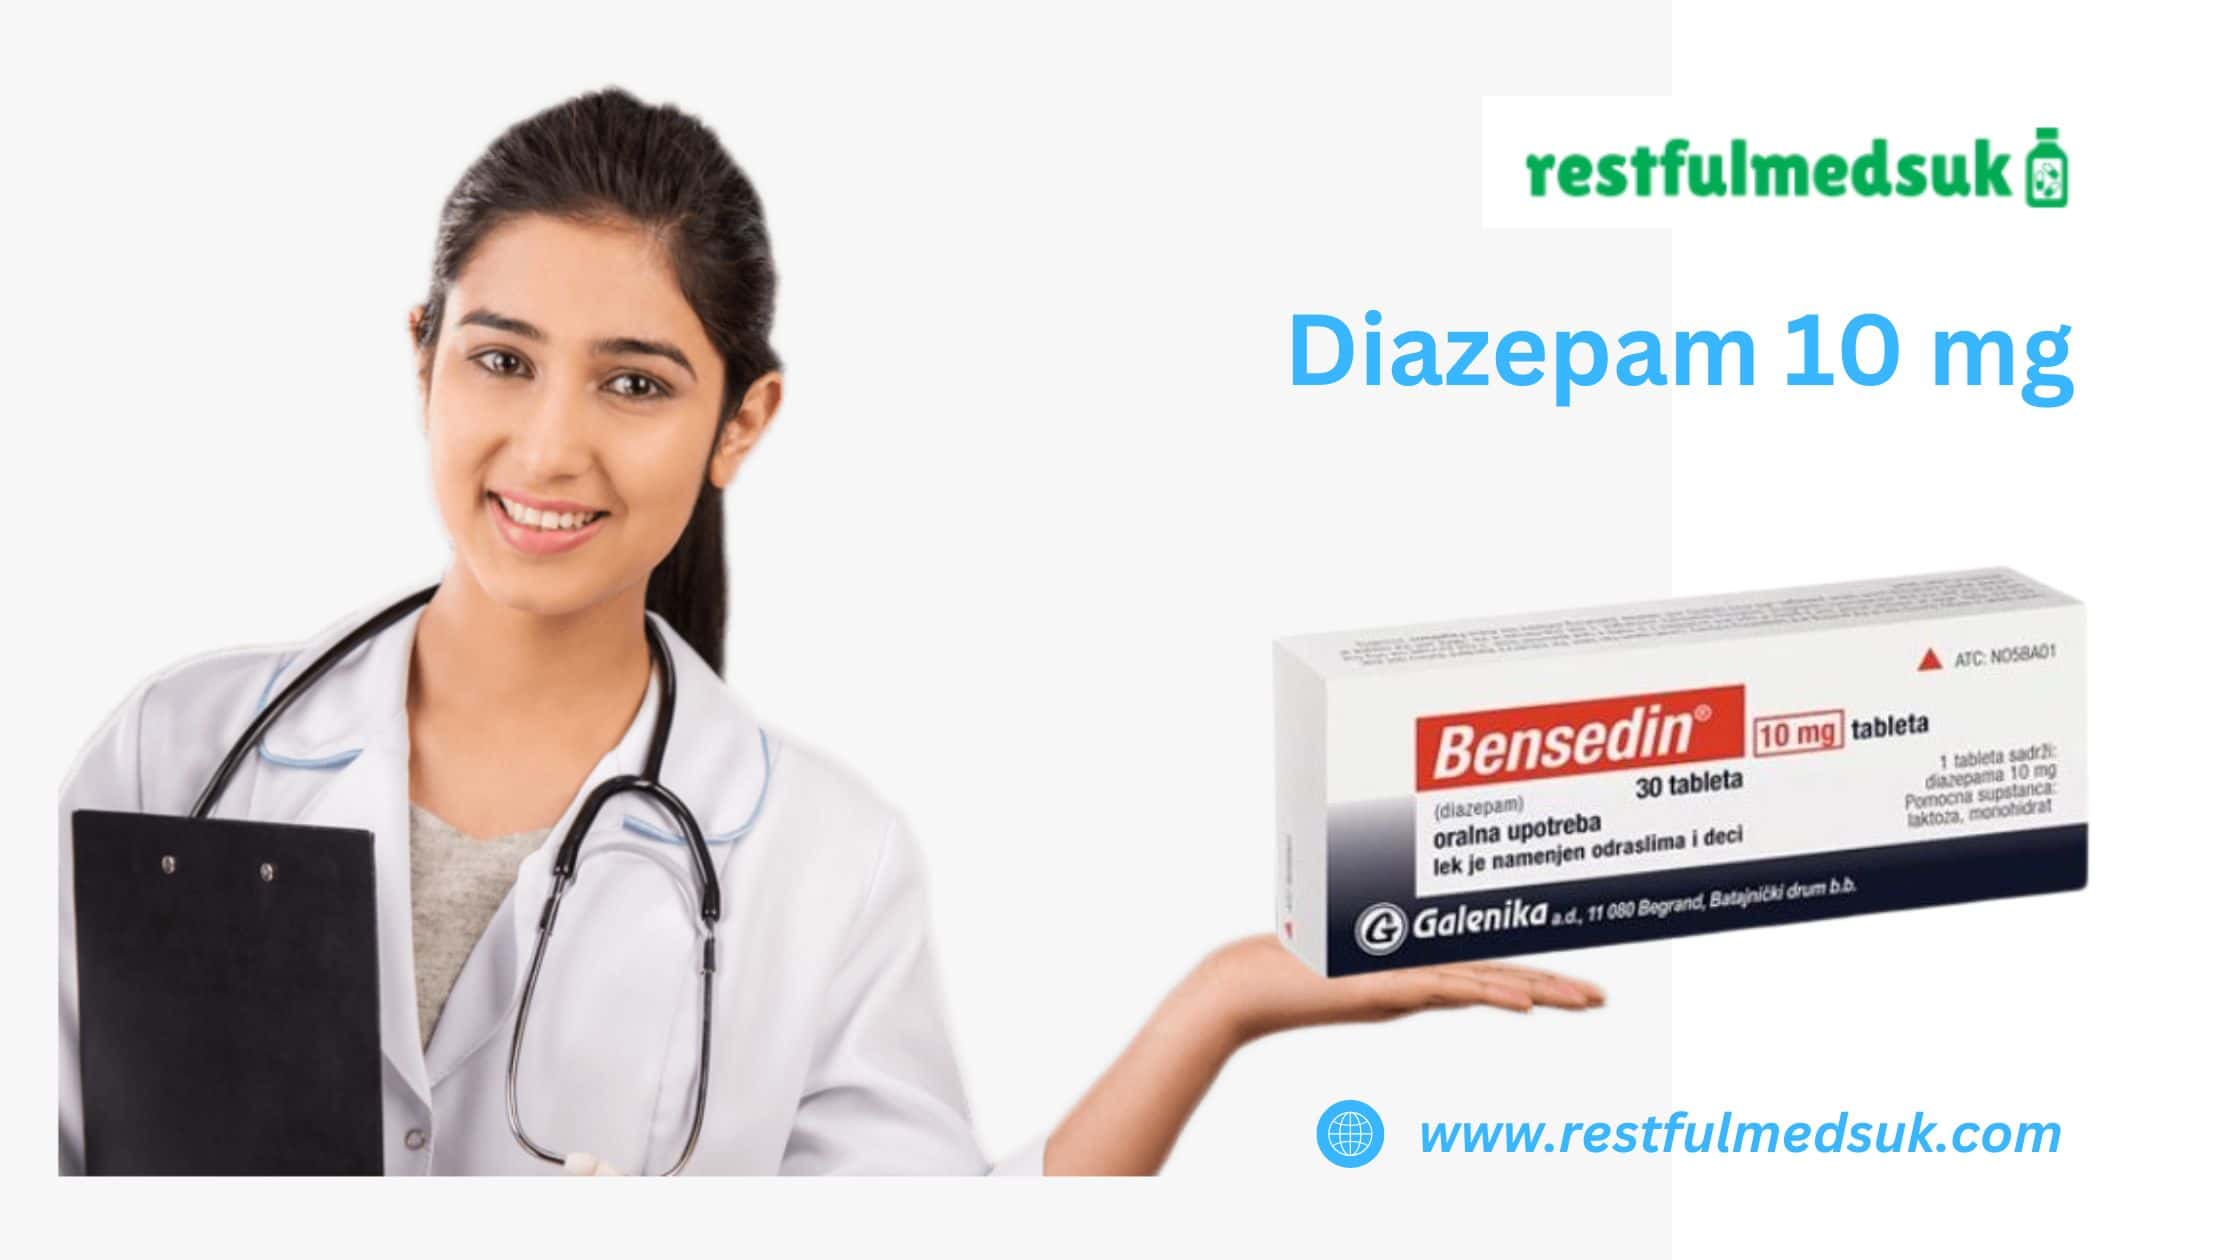 Buy Diazepam Without a Prescription